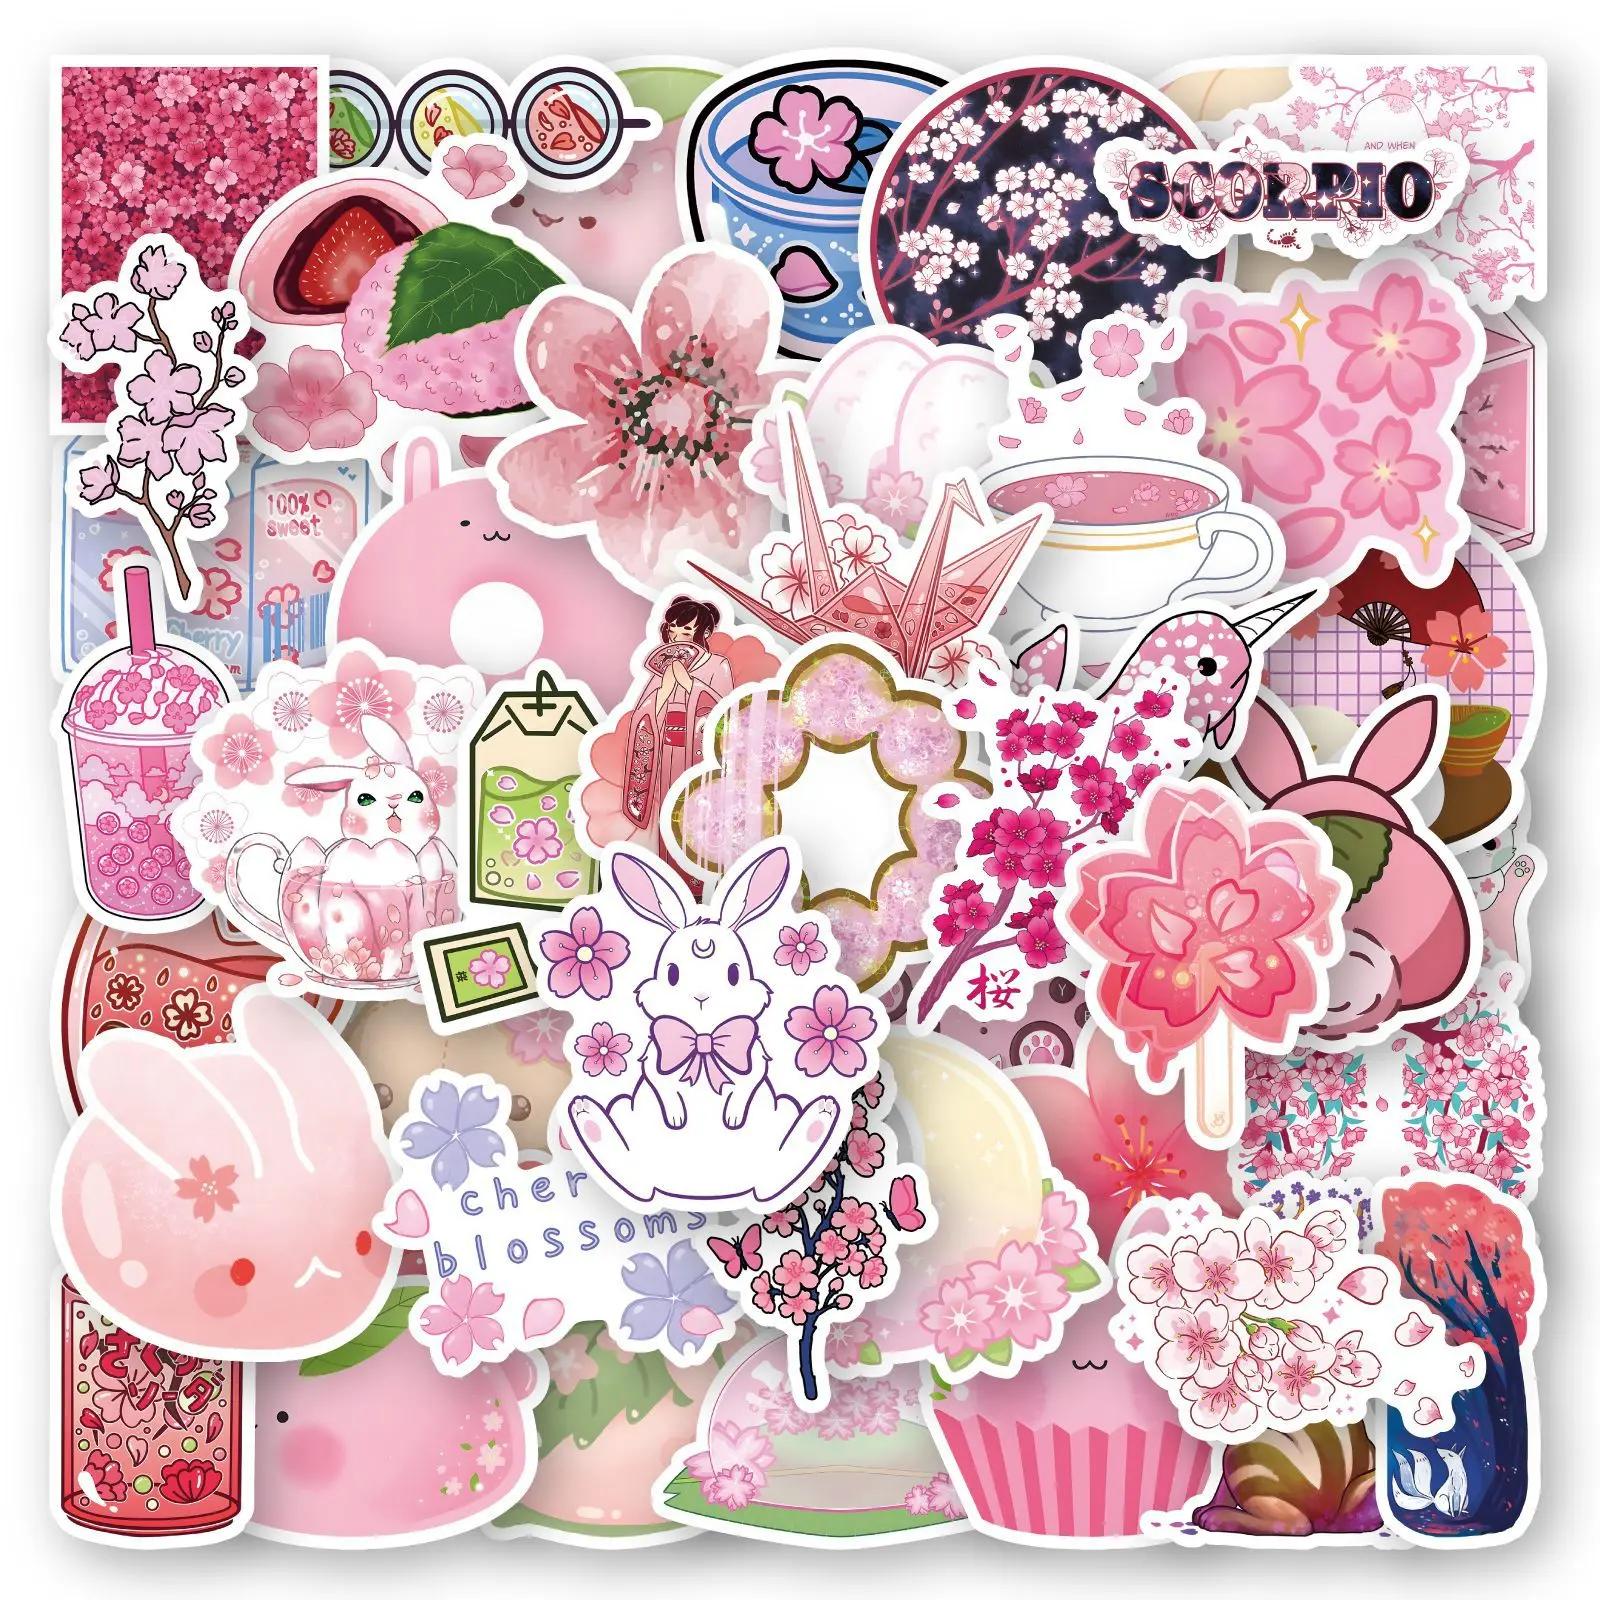 50Pcs Cute Animal Pink sakura Stickers Aesthetic Girls for Notebook Luggage Stationery Phone Cartoon Graffiti Sticker Toys столик для ноутбука zarin126139316 stol notebook pink 88